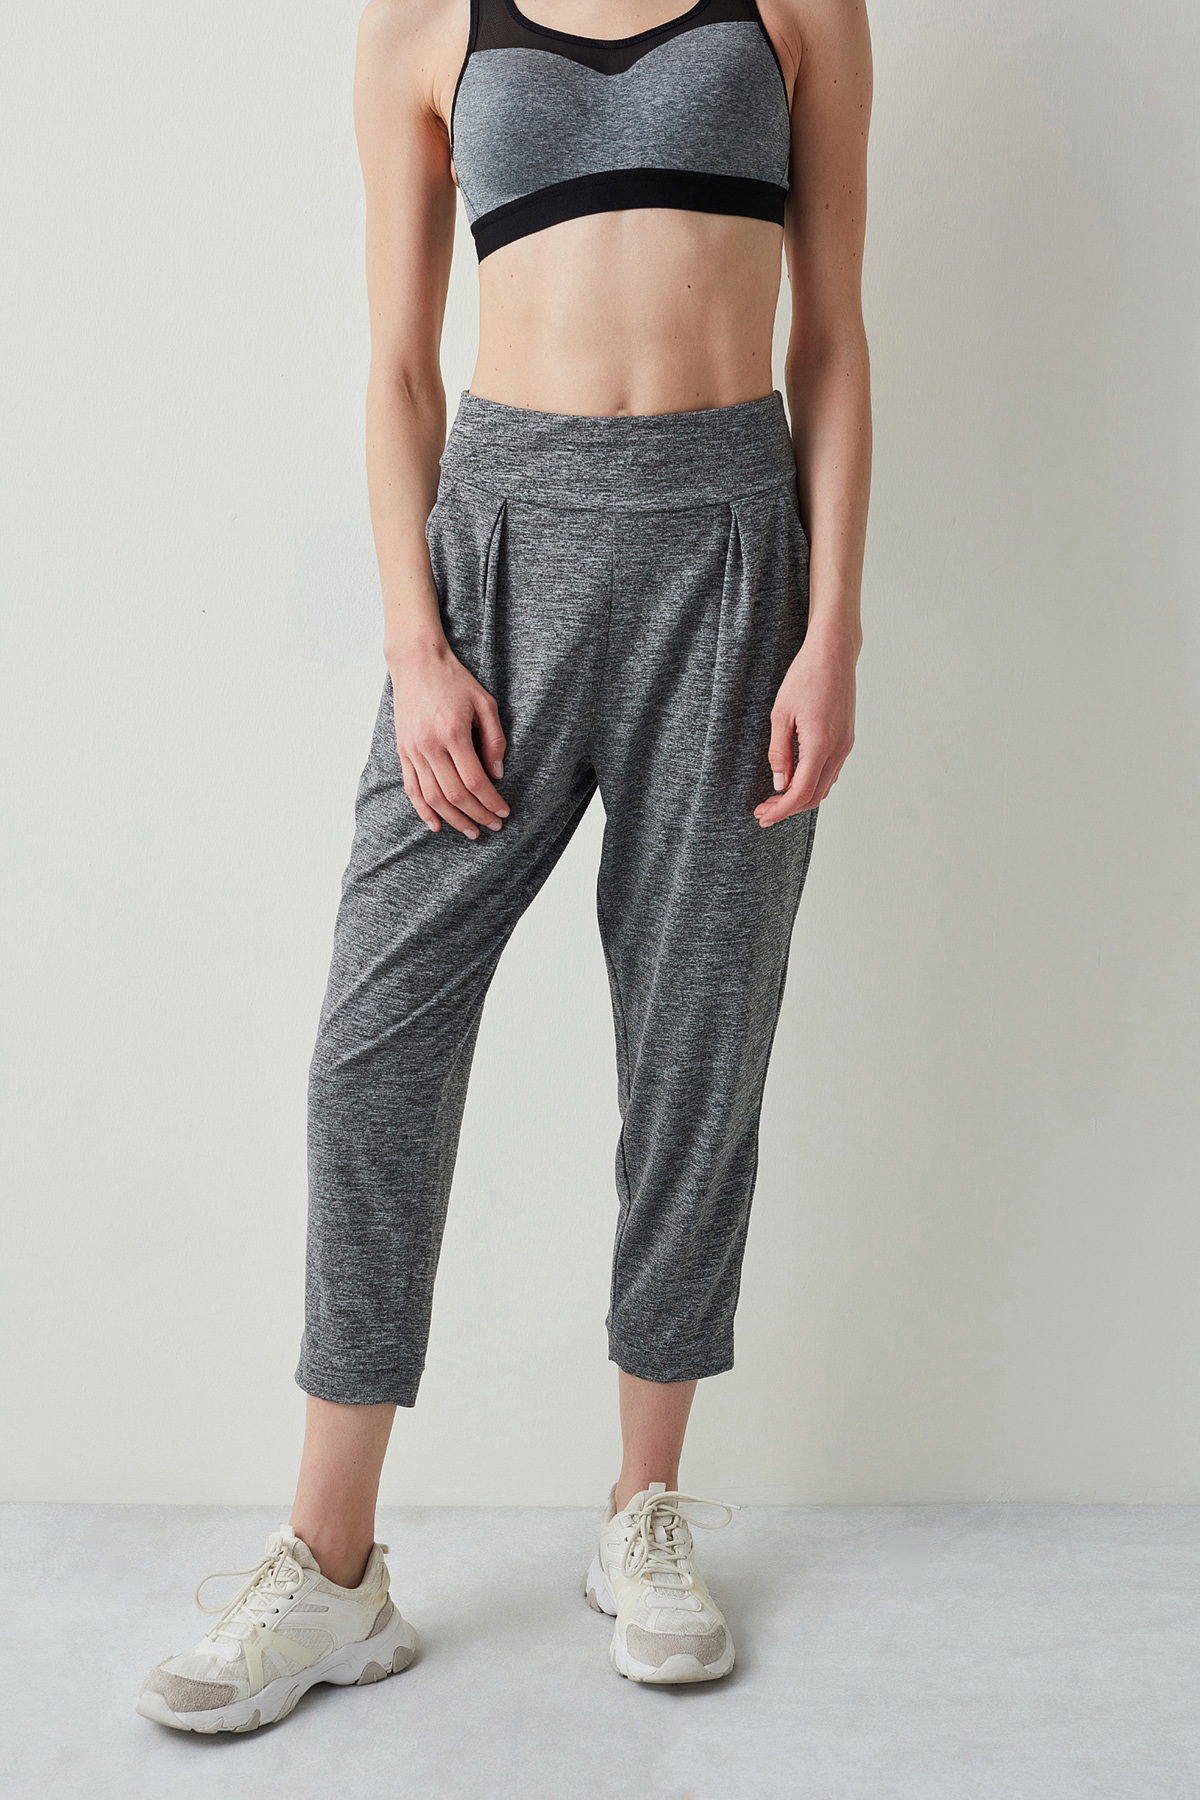 Penti Gri Yoga-Plates Pantolonu. 1